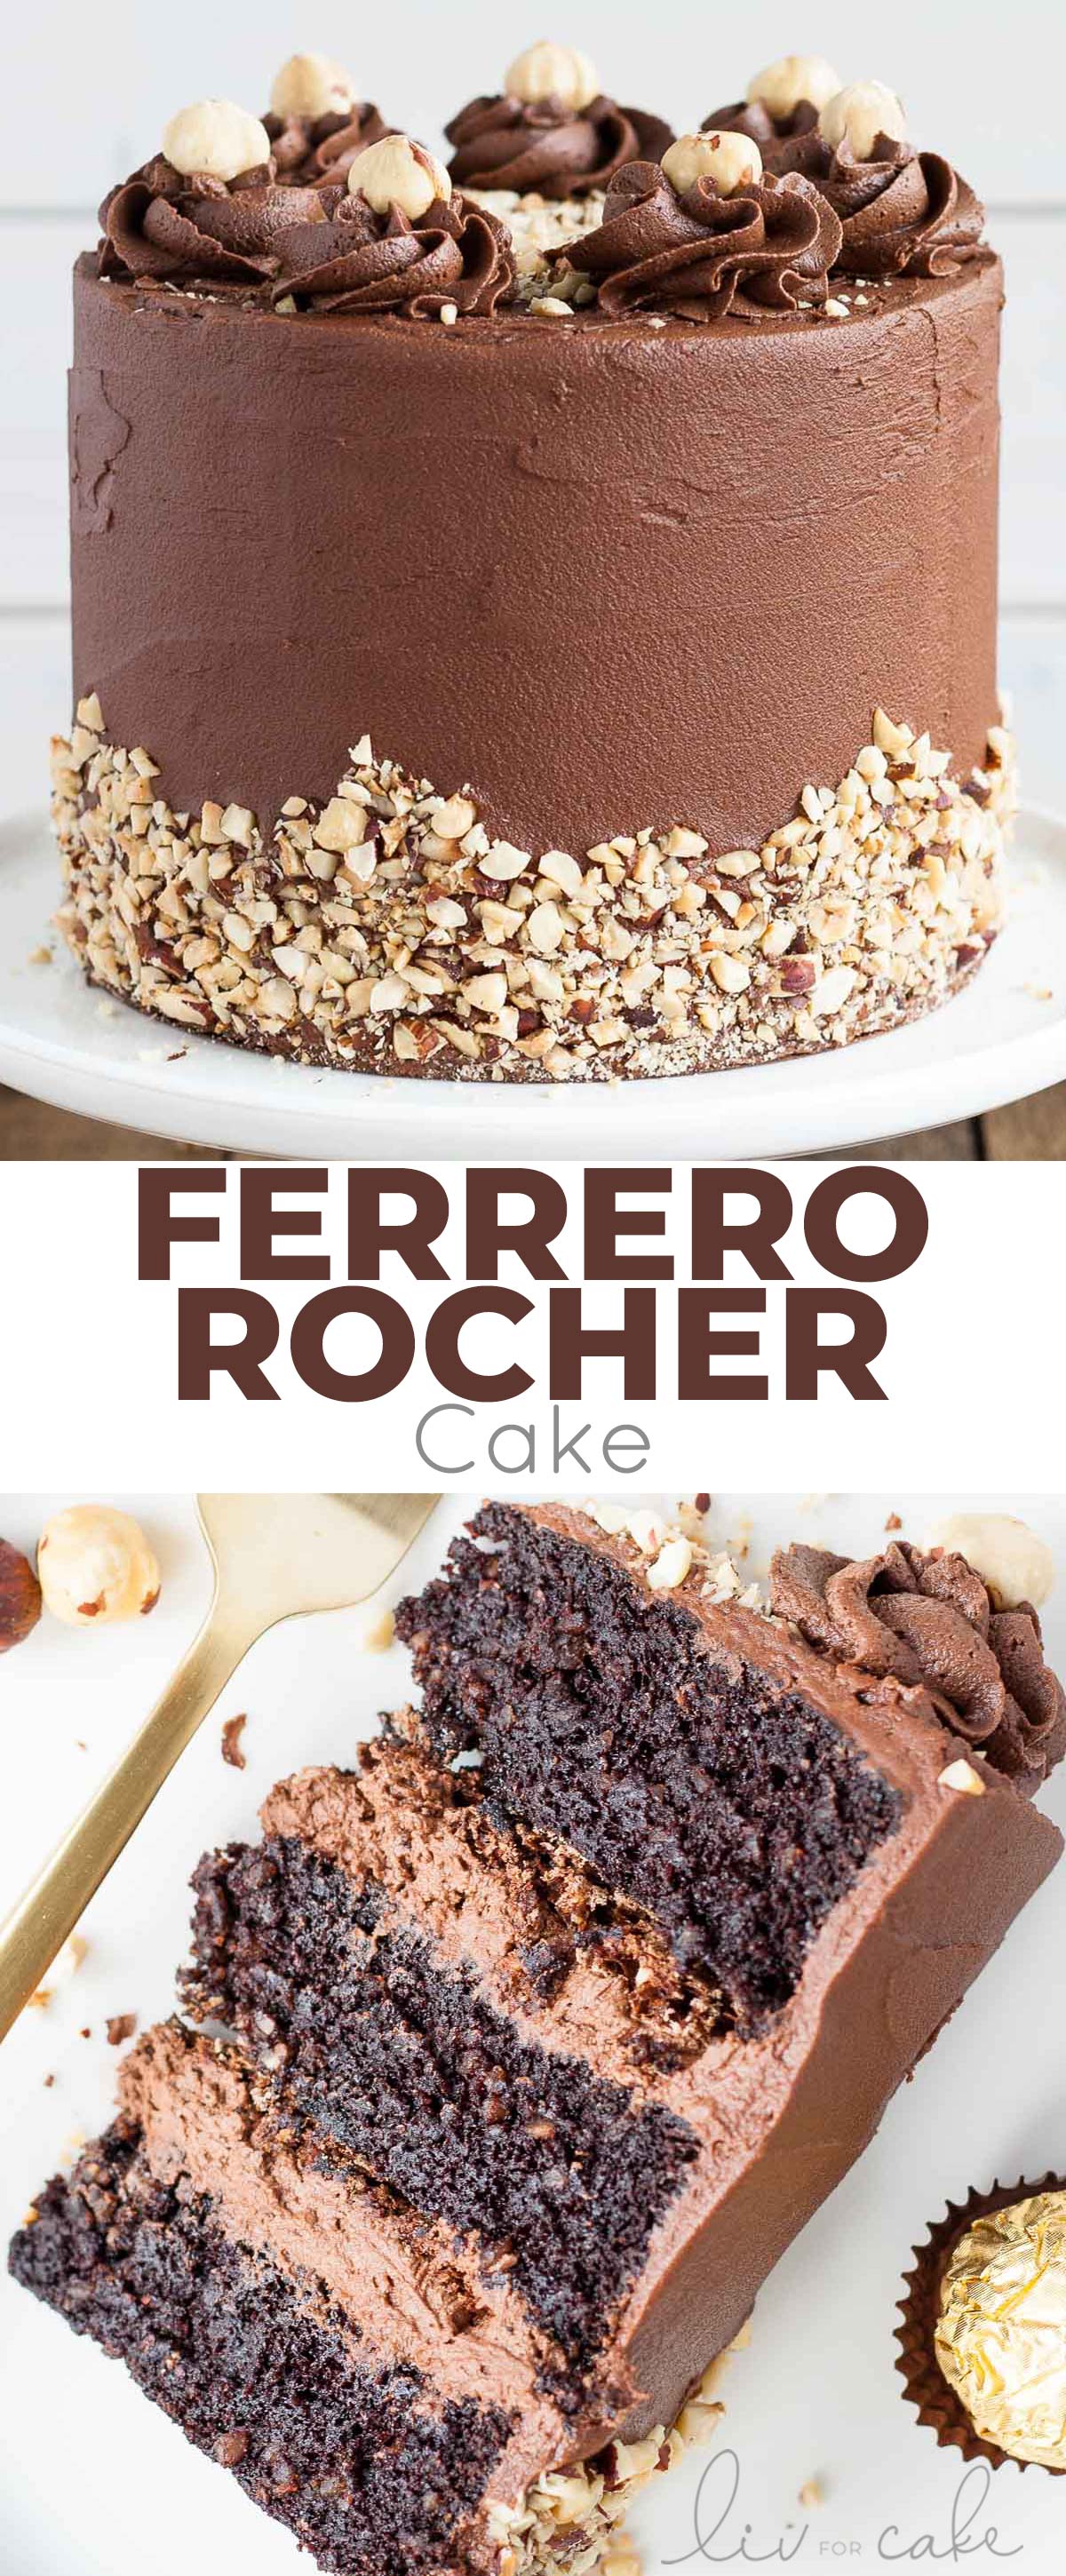 This Ferrero Rocher Cake collage